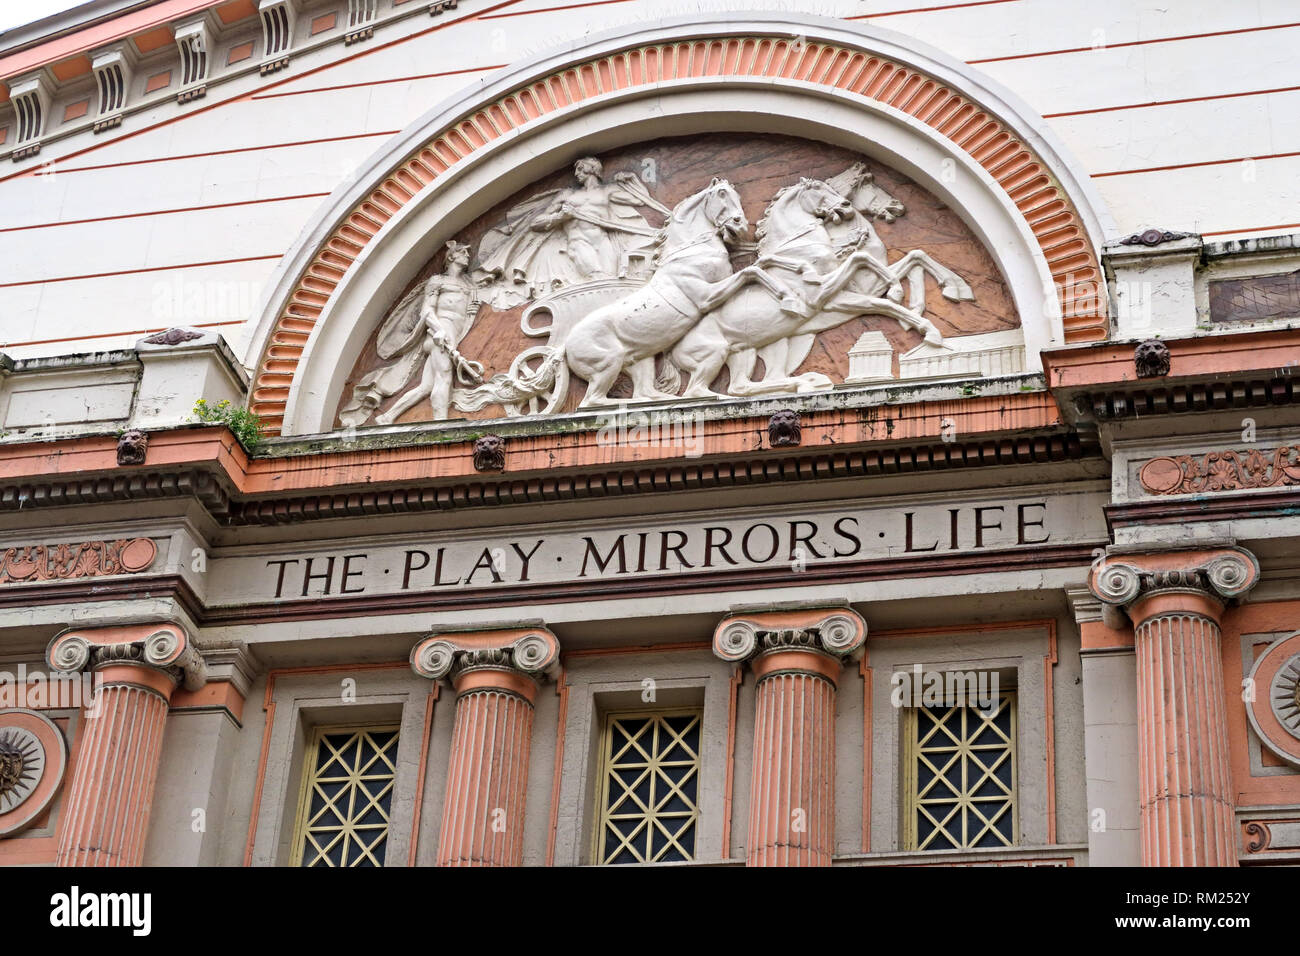 Manchester Opera House, Entrée & Box Office, 3 Quay St, Manchester, North West England, UK, M3 3HP Banque D'Images